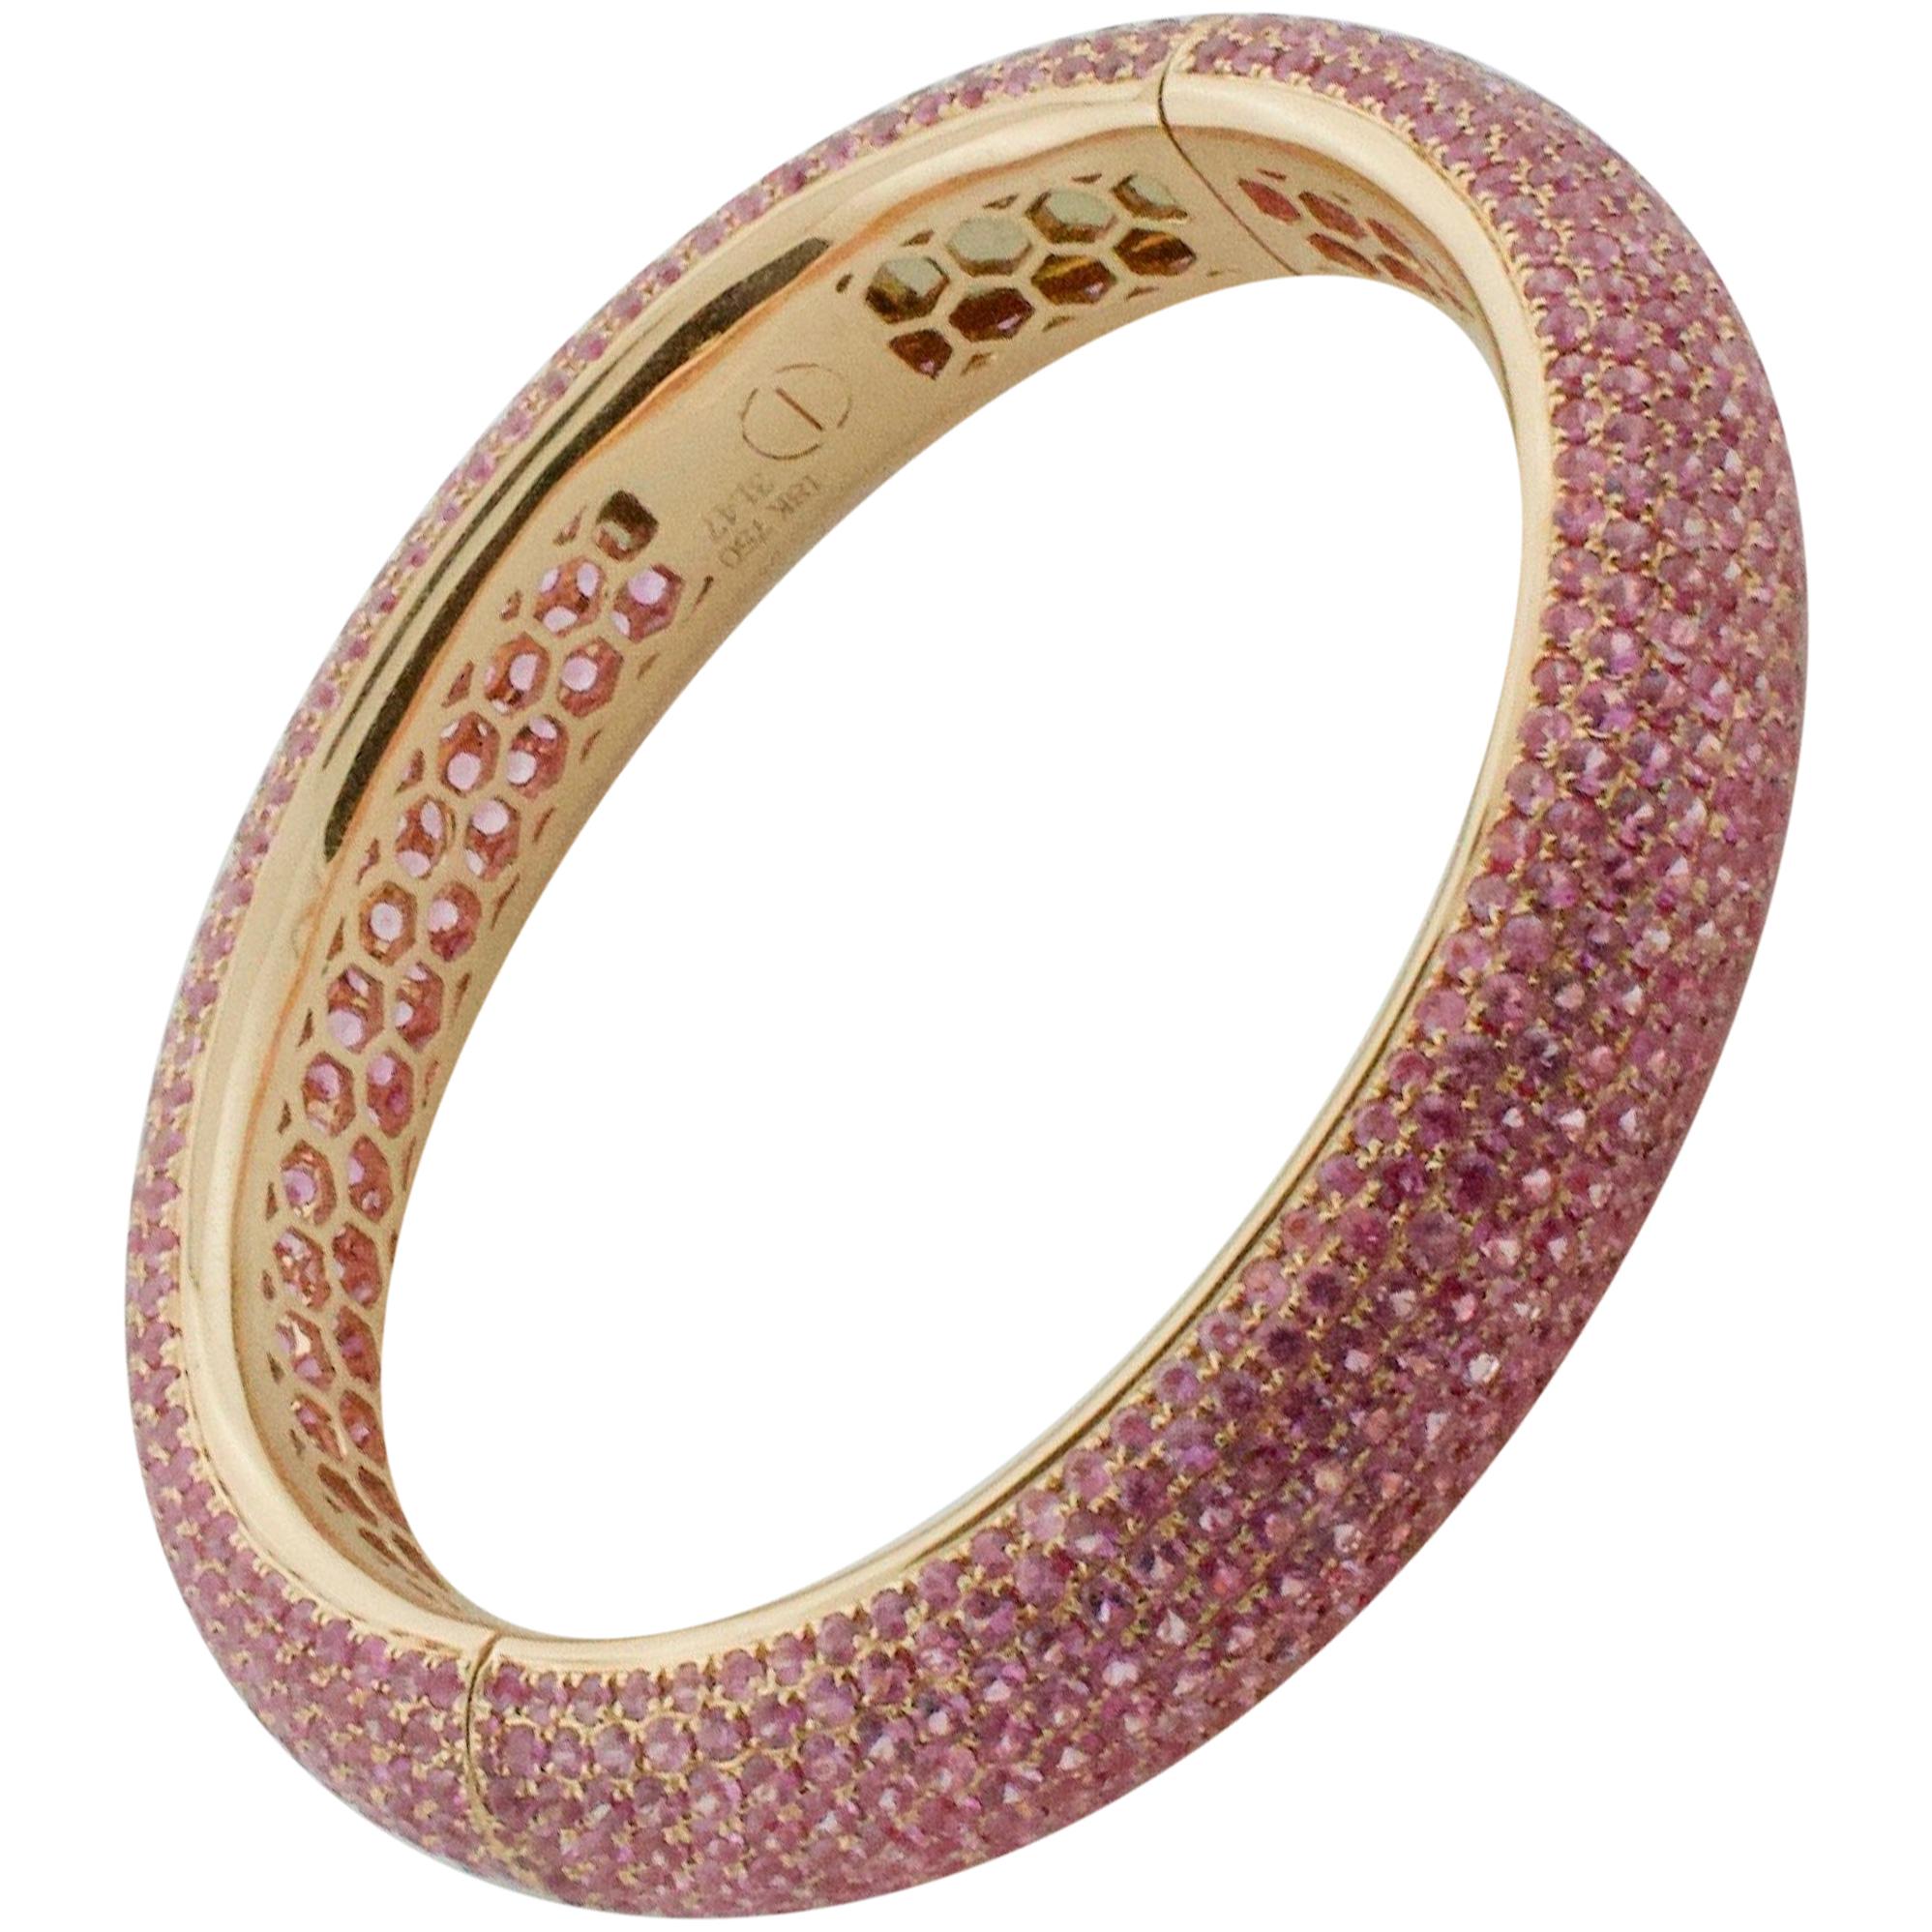 Stunning Pink Sapphire Bangle Bracelet in 18 Karat Rose Gold 31.47 Carat For Sale